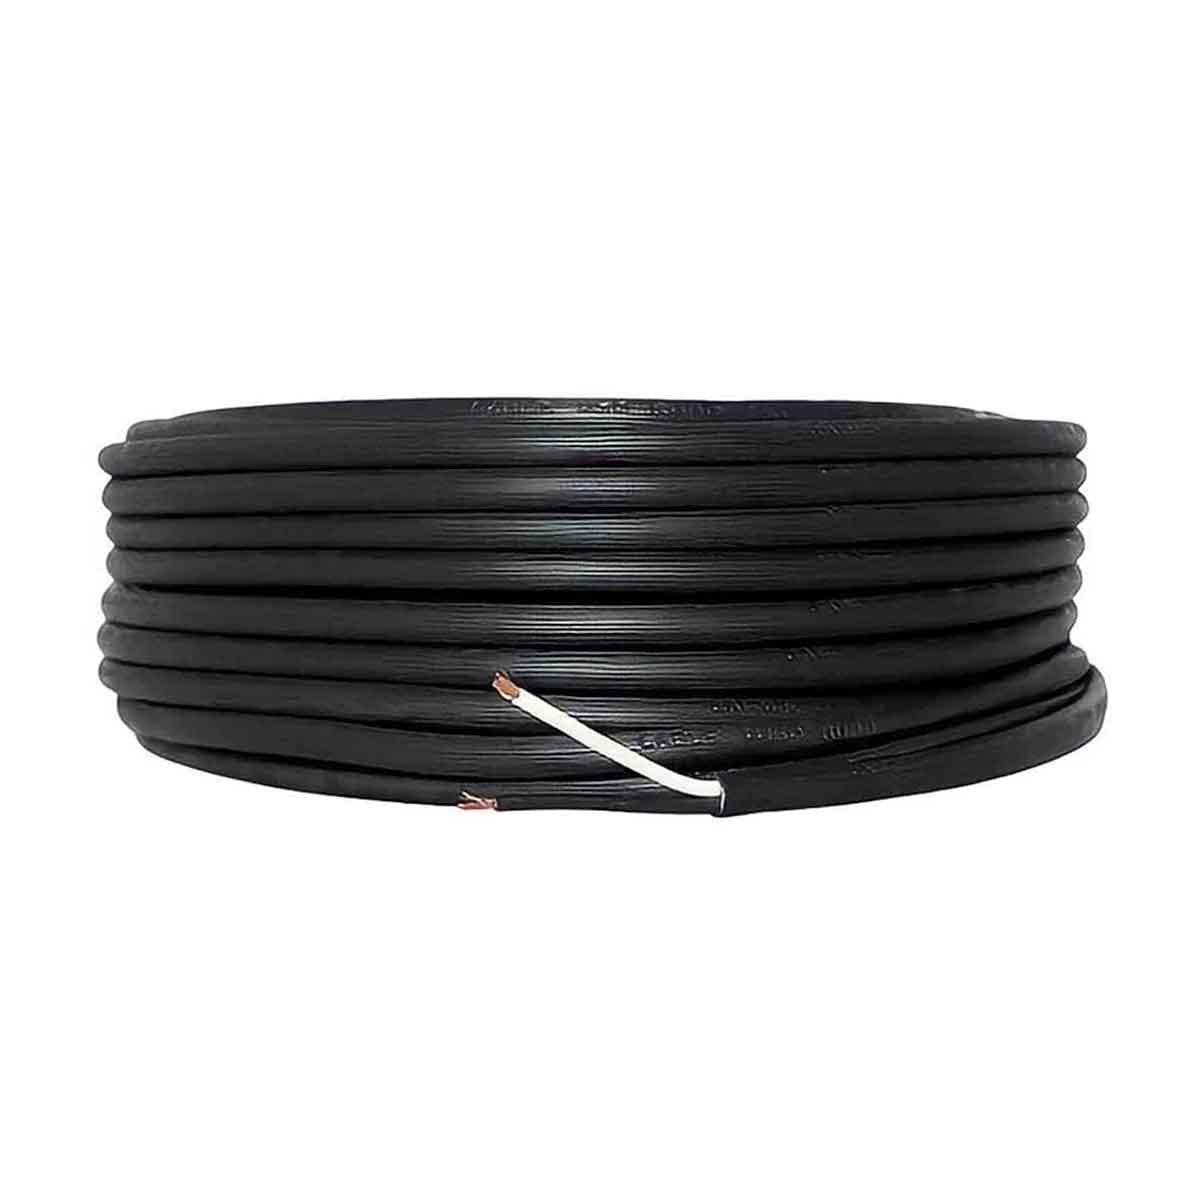 rollo de cable negro con 2 hilos